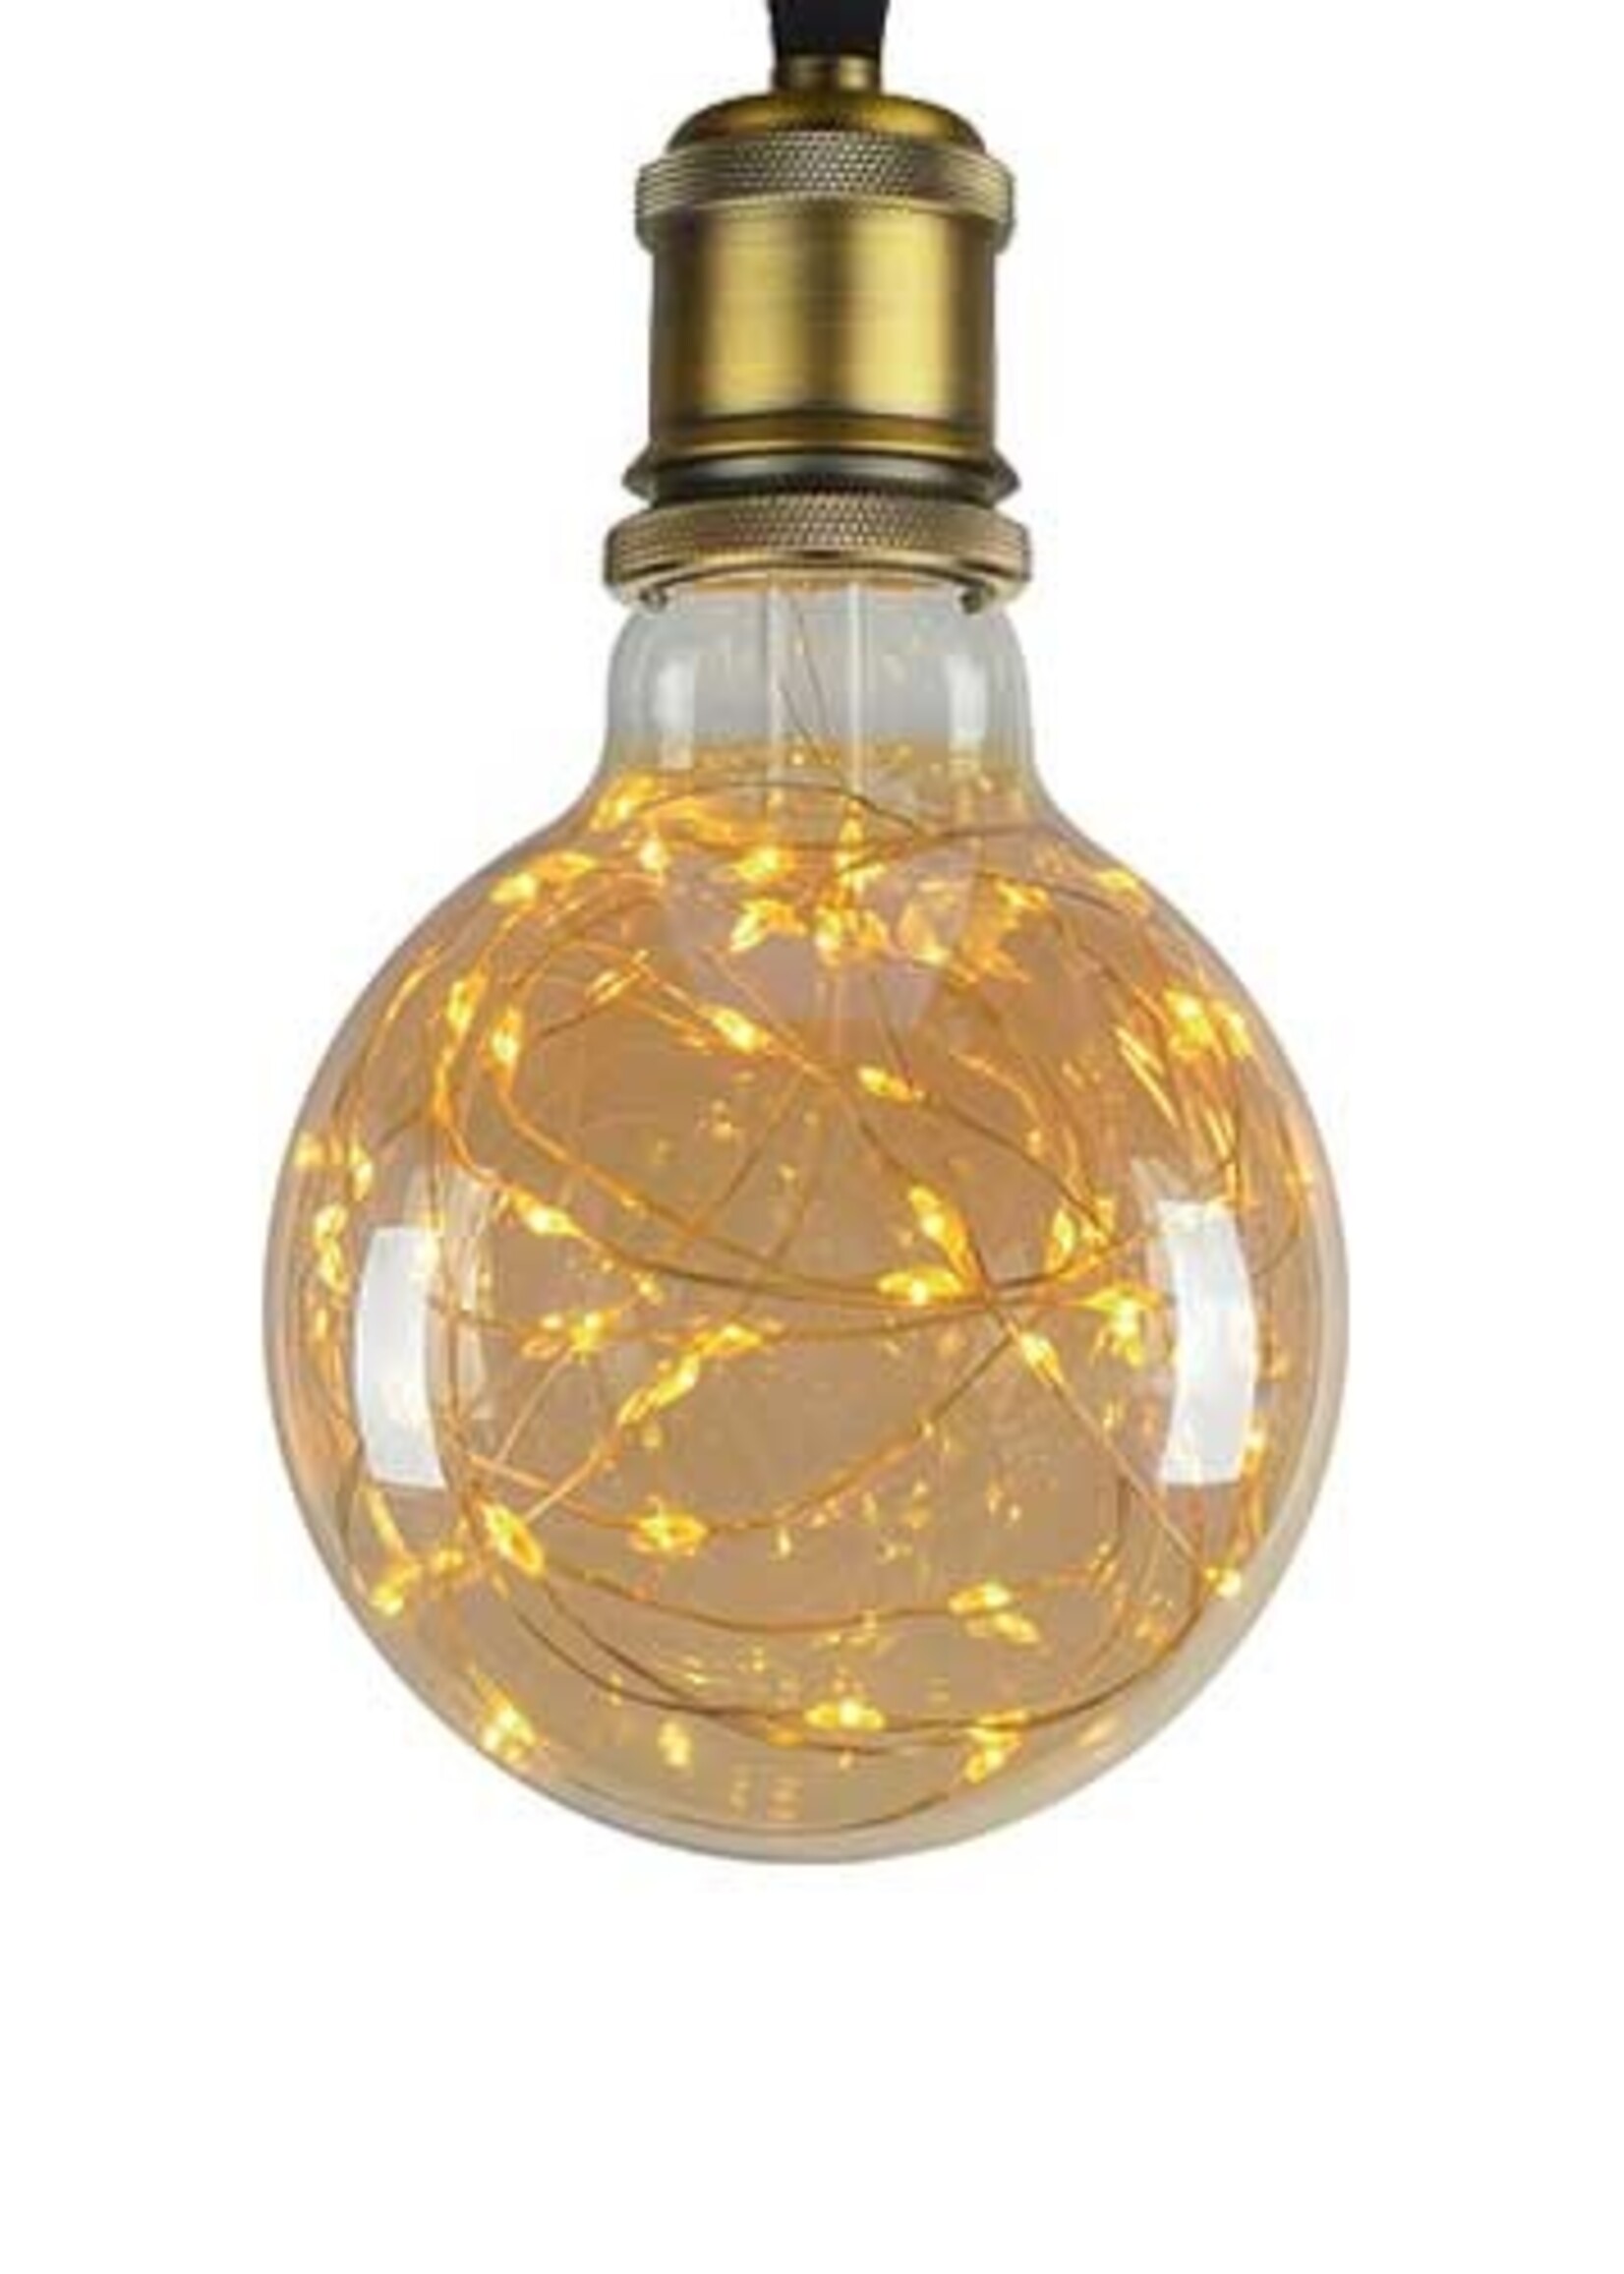 LEDWINKEL-Online E27 LED Lamp filament G95 koperdraad 1.5W 2100K amber